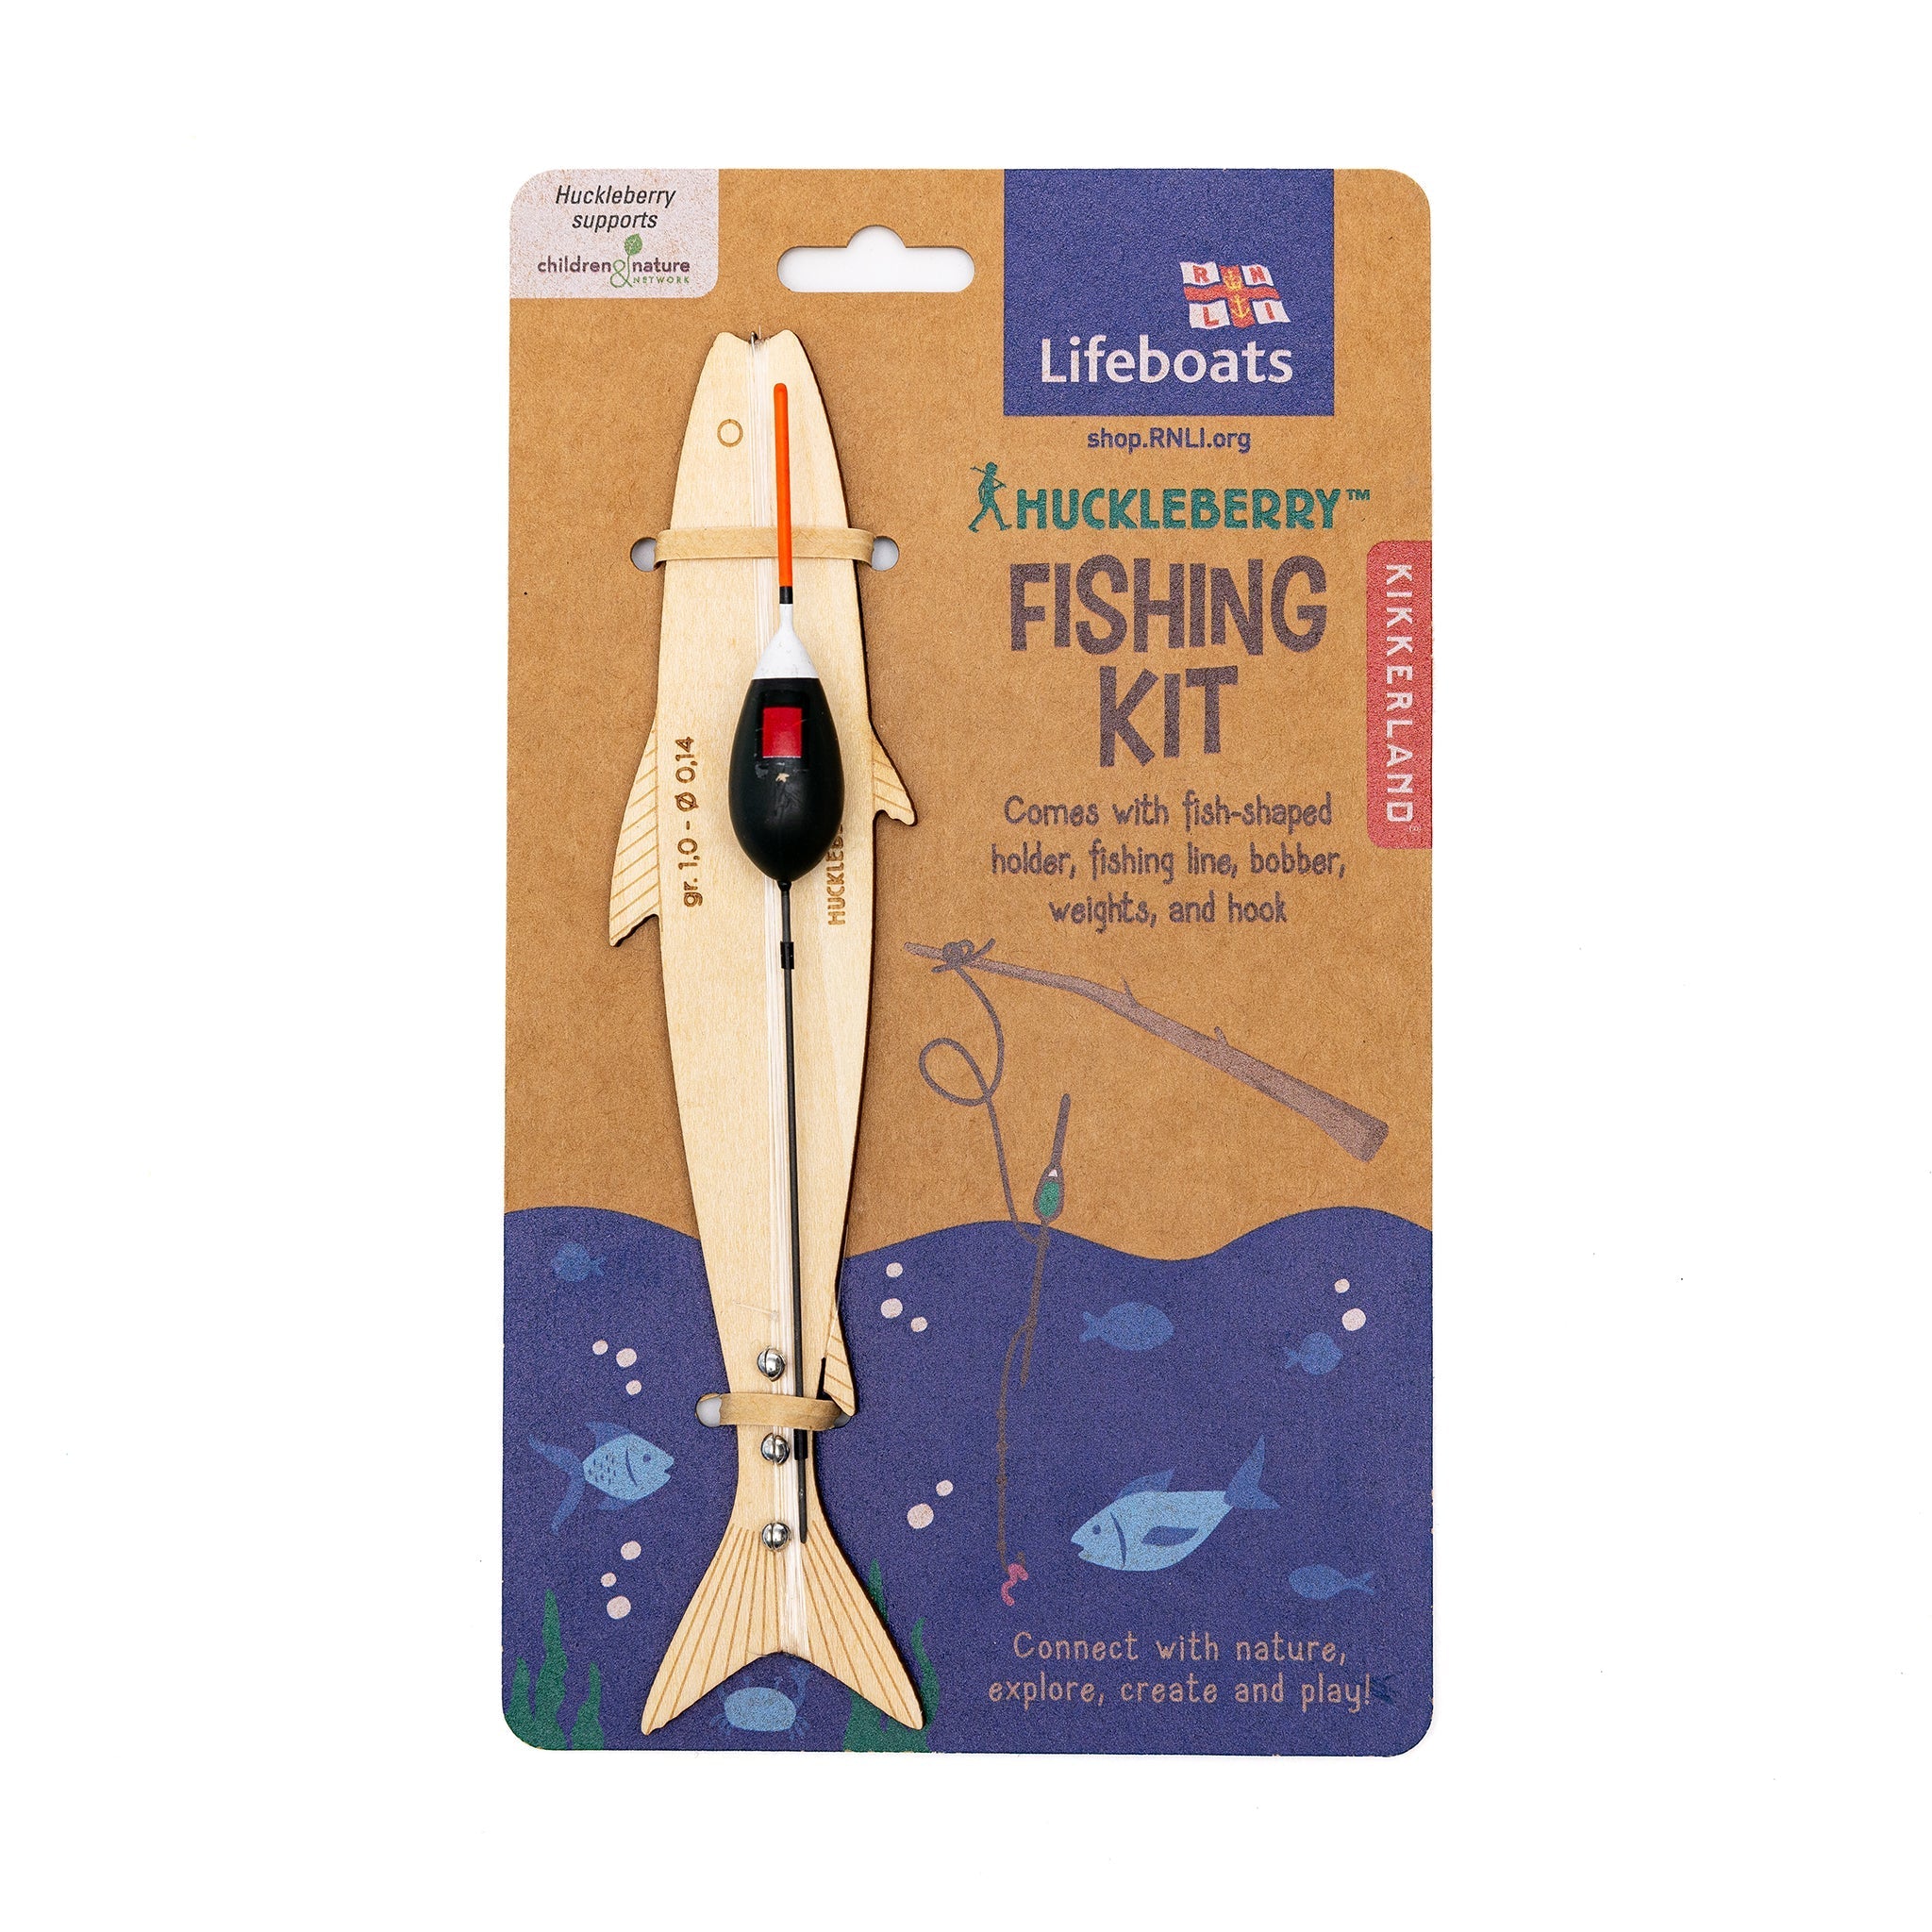 RNLI + Huckleberry Fishing Kit | RNLI Shop